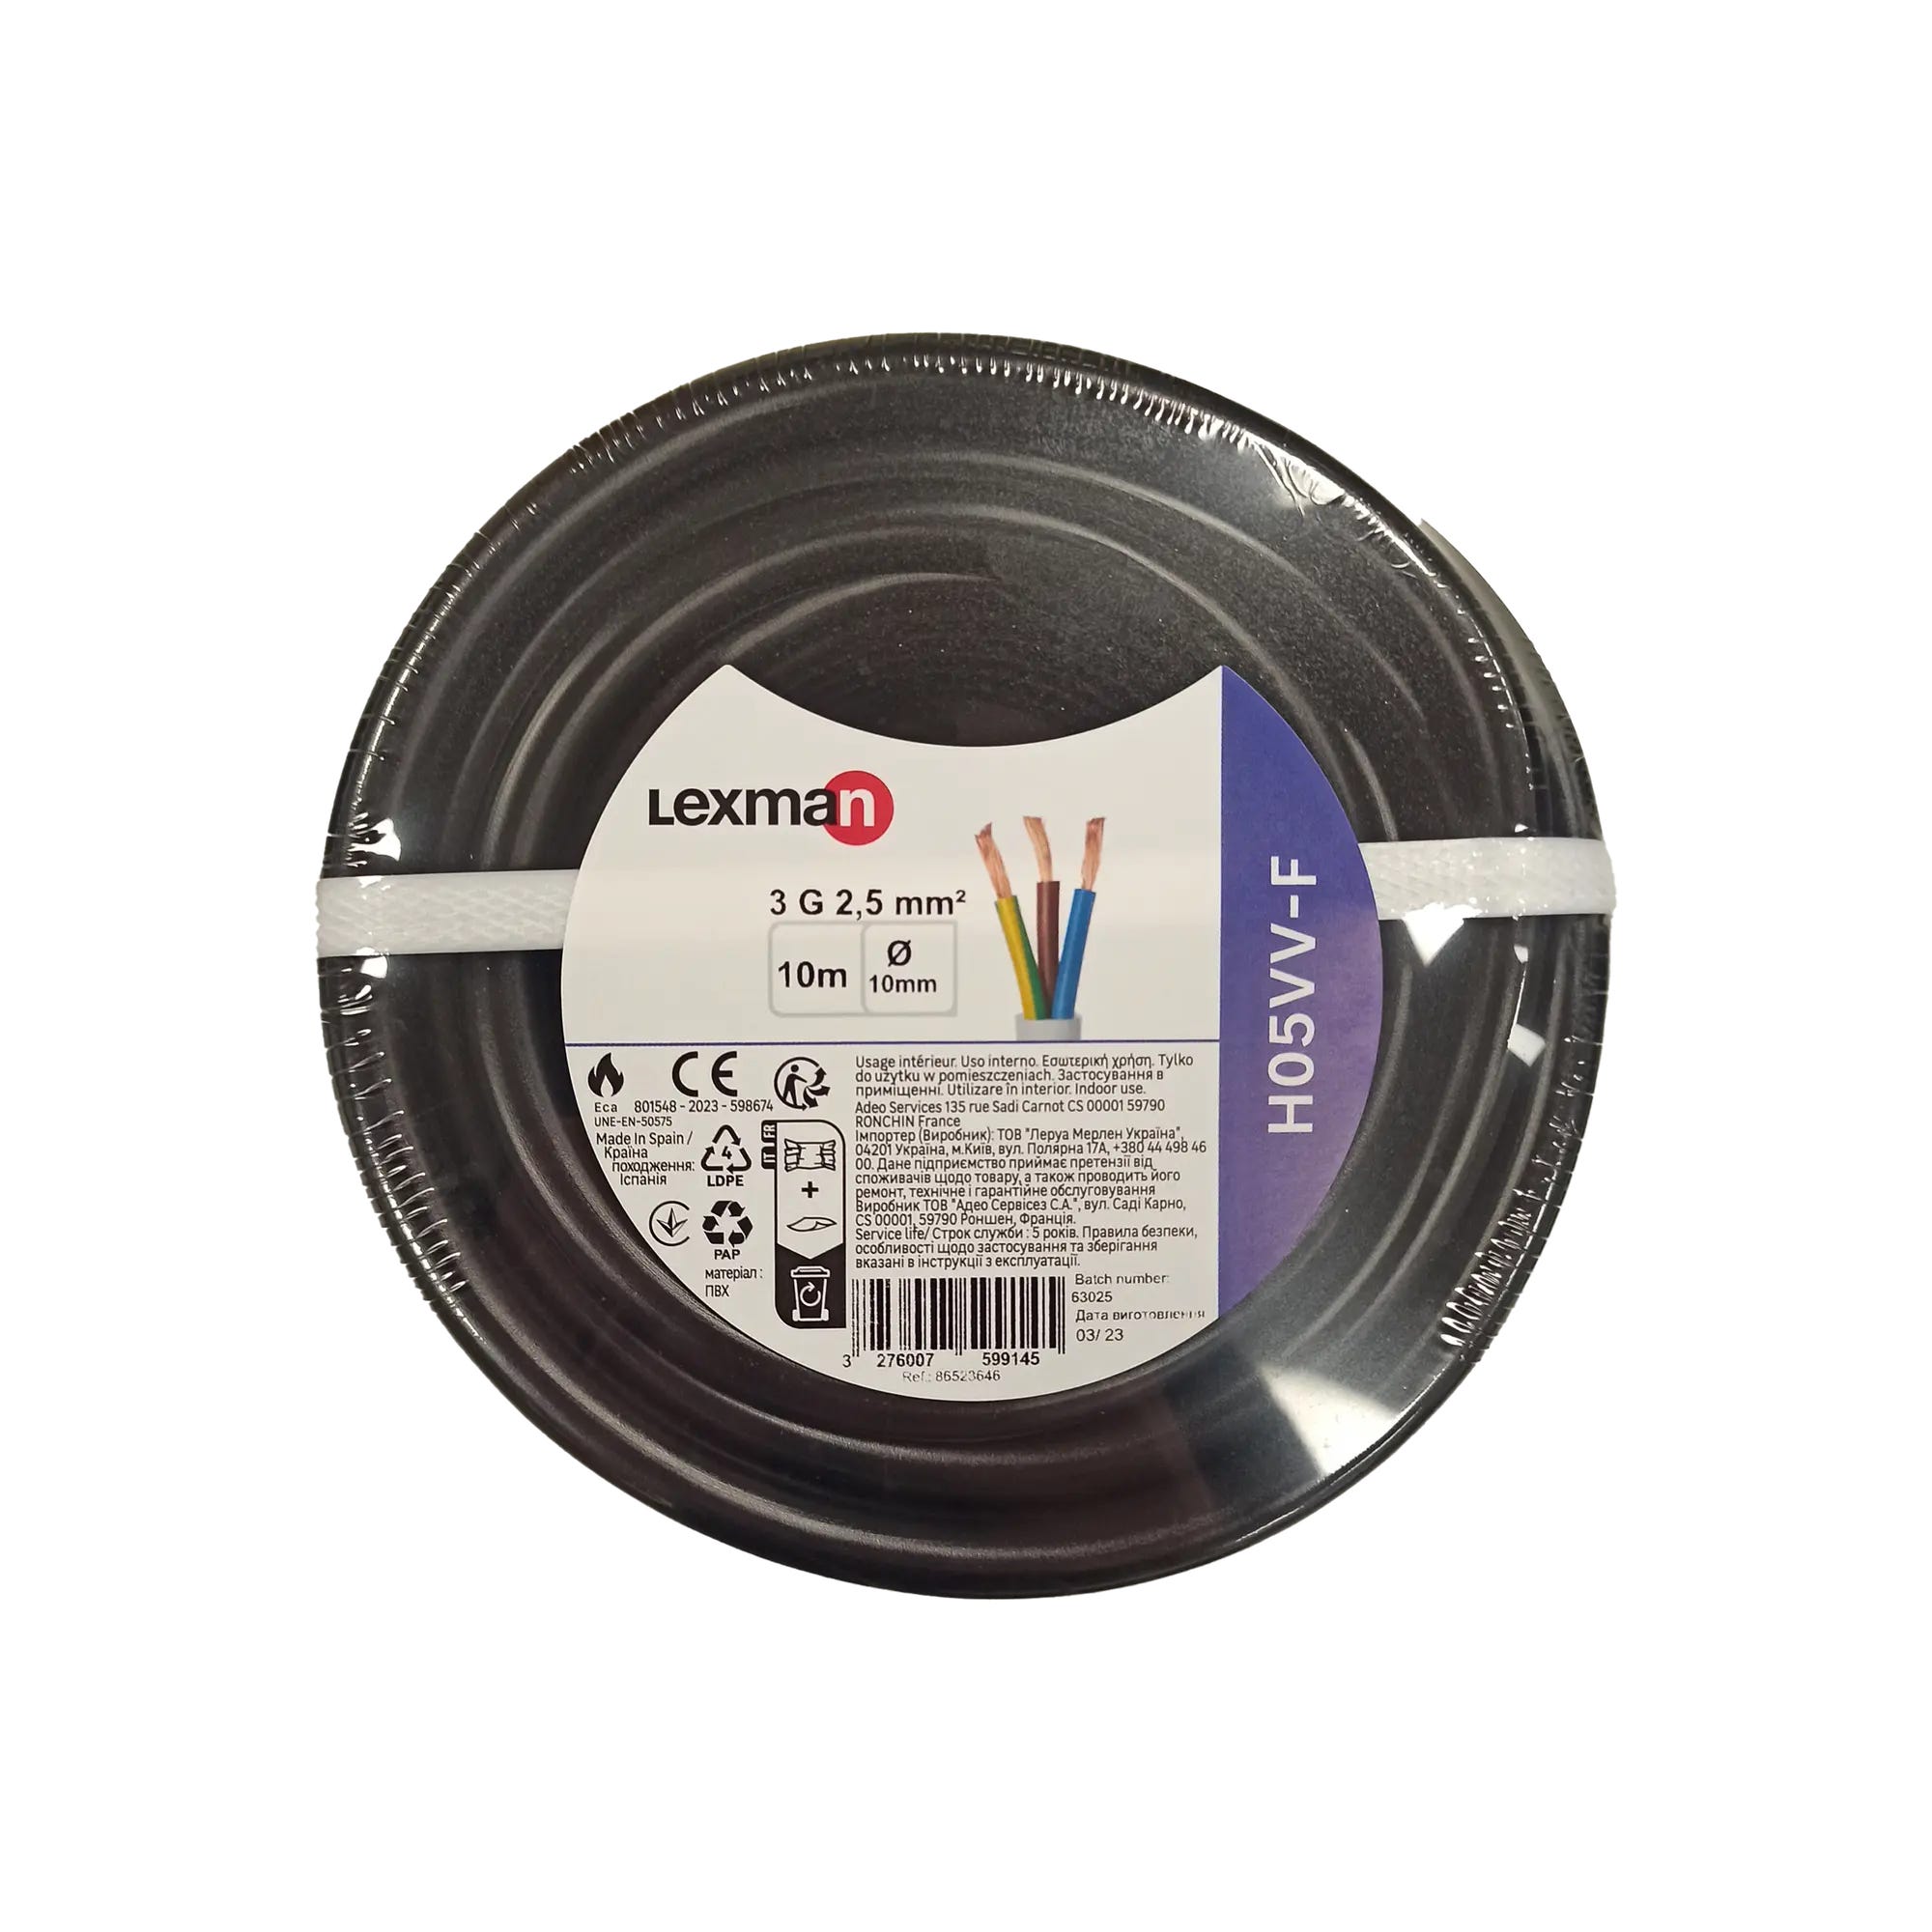 Comprar Cable Eléctrico Exterior 1.5mm Unipolar Material PVC y Cobre Color  Negro Medida 10m